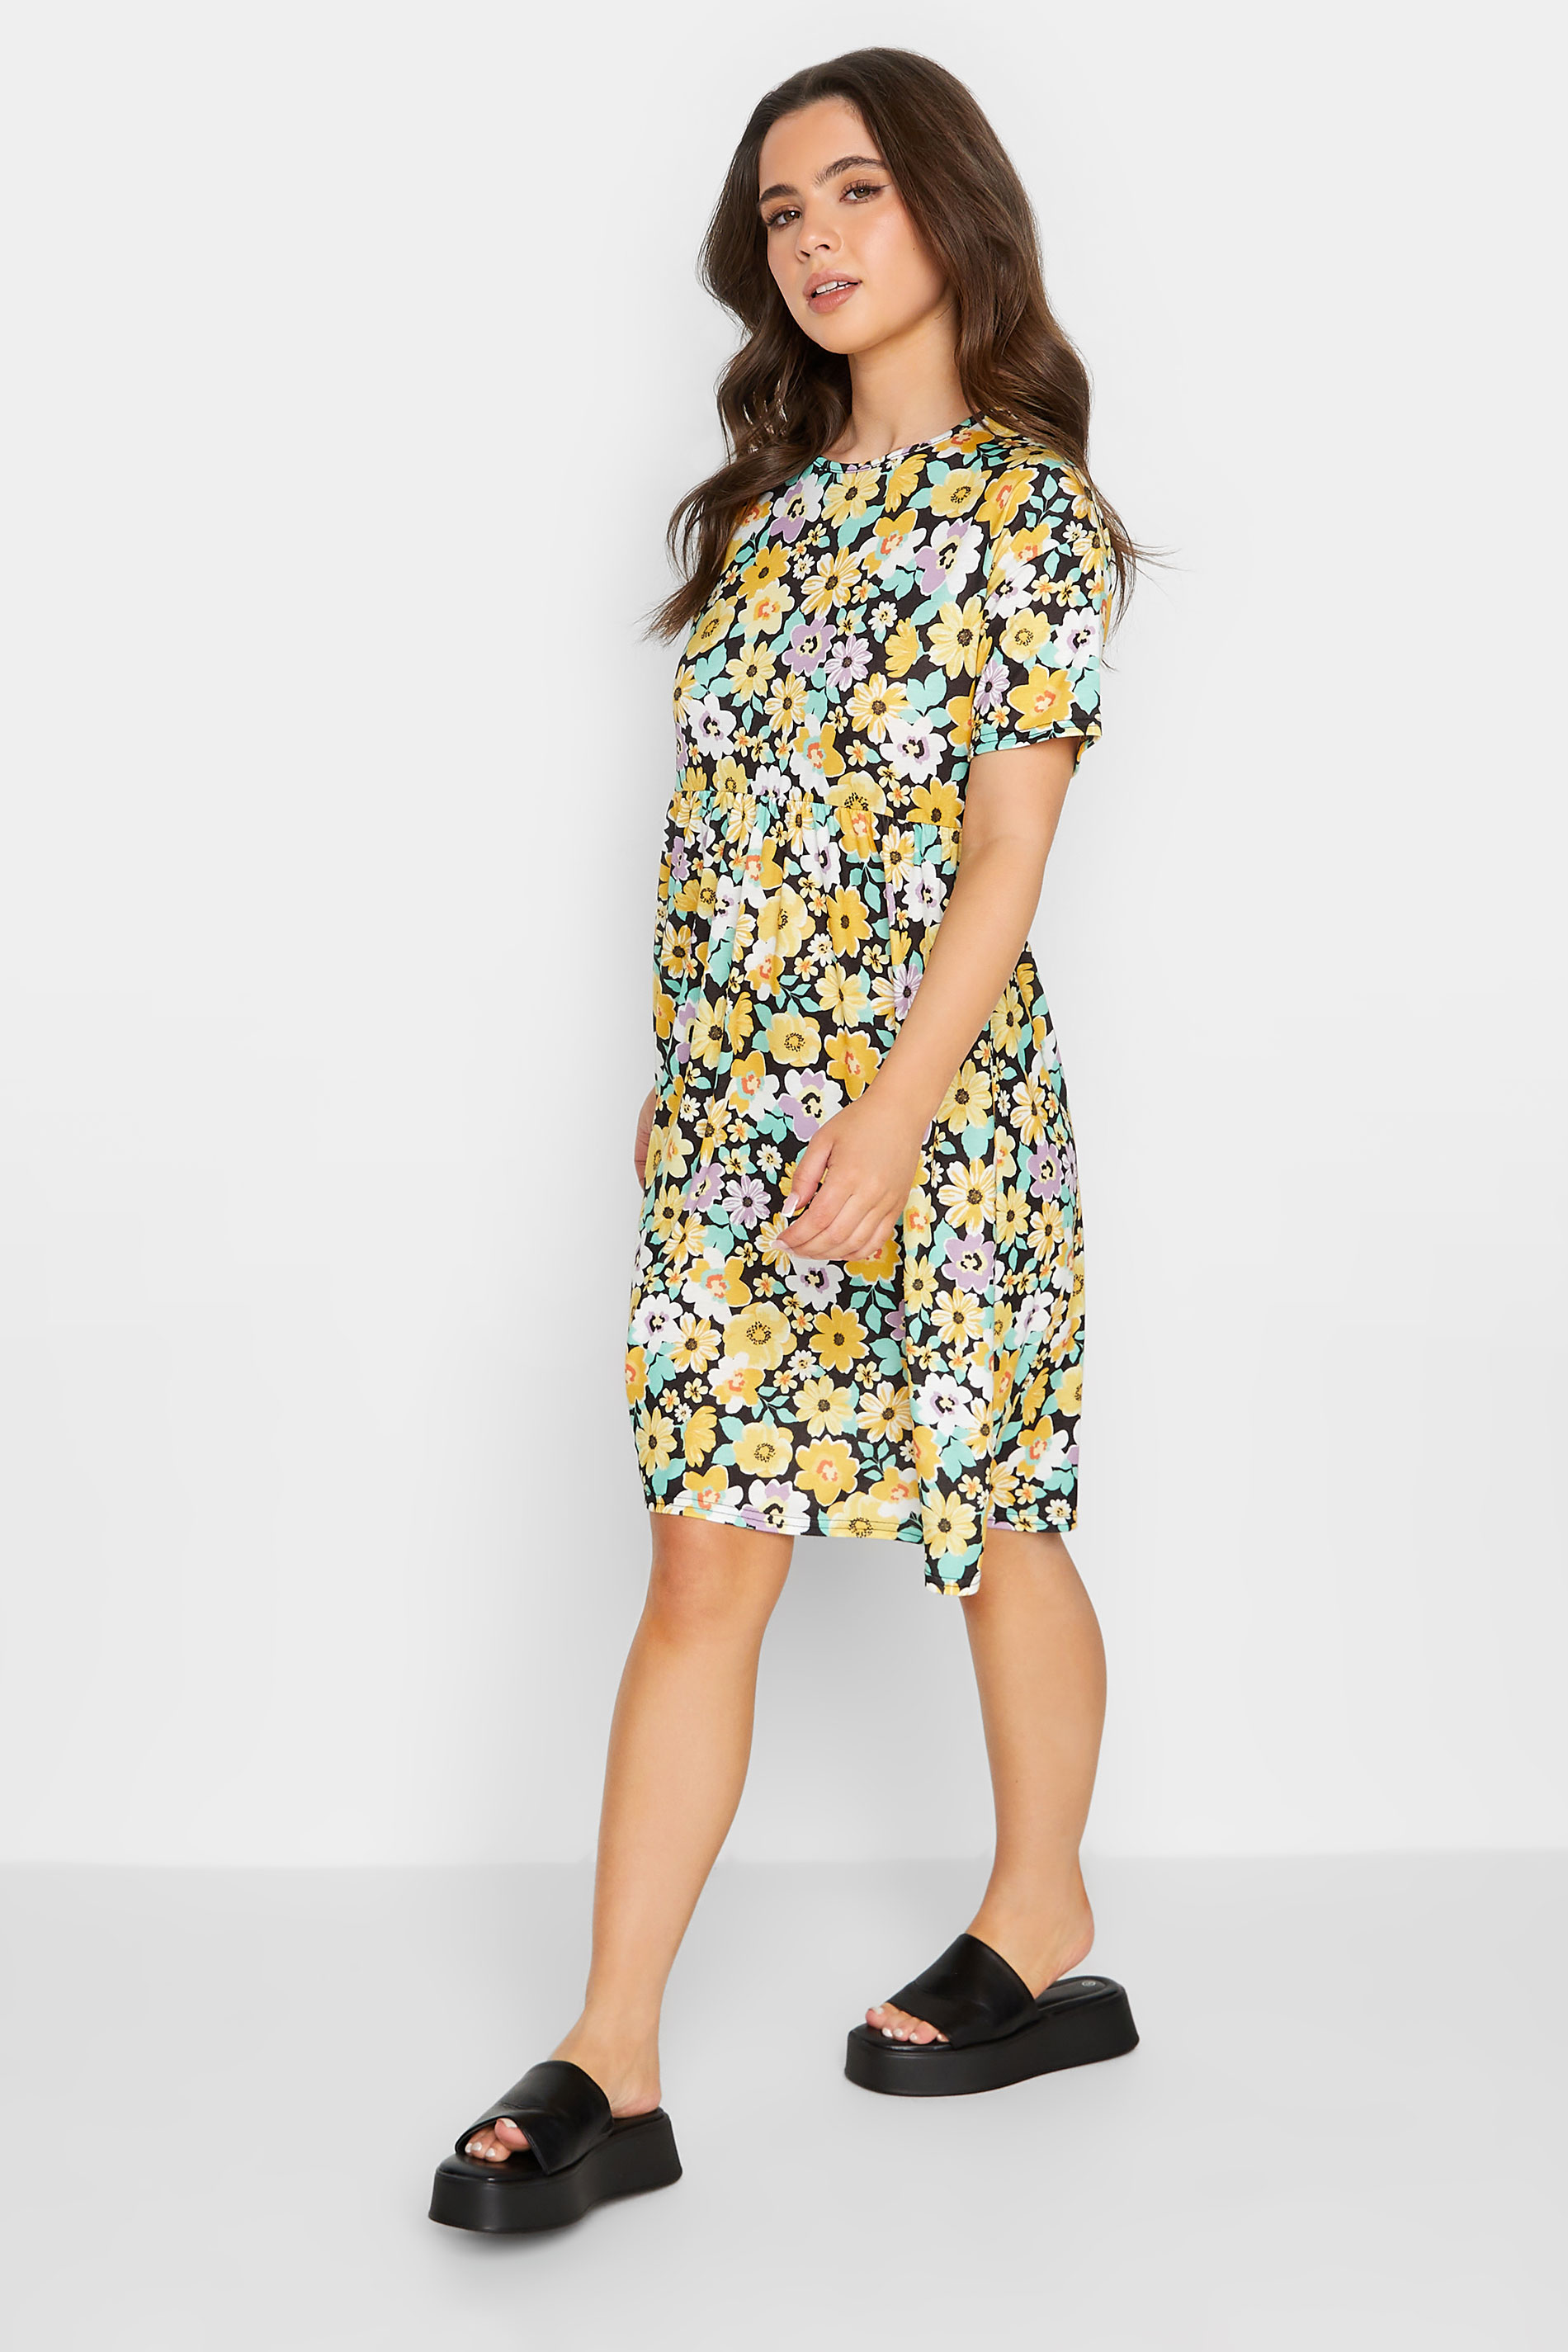 Petite Yellow Floral Print Smock Dress | PixieGirl 2